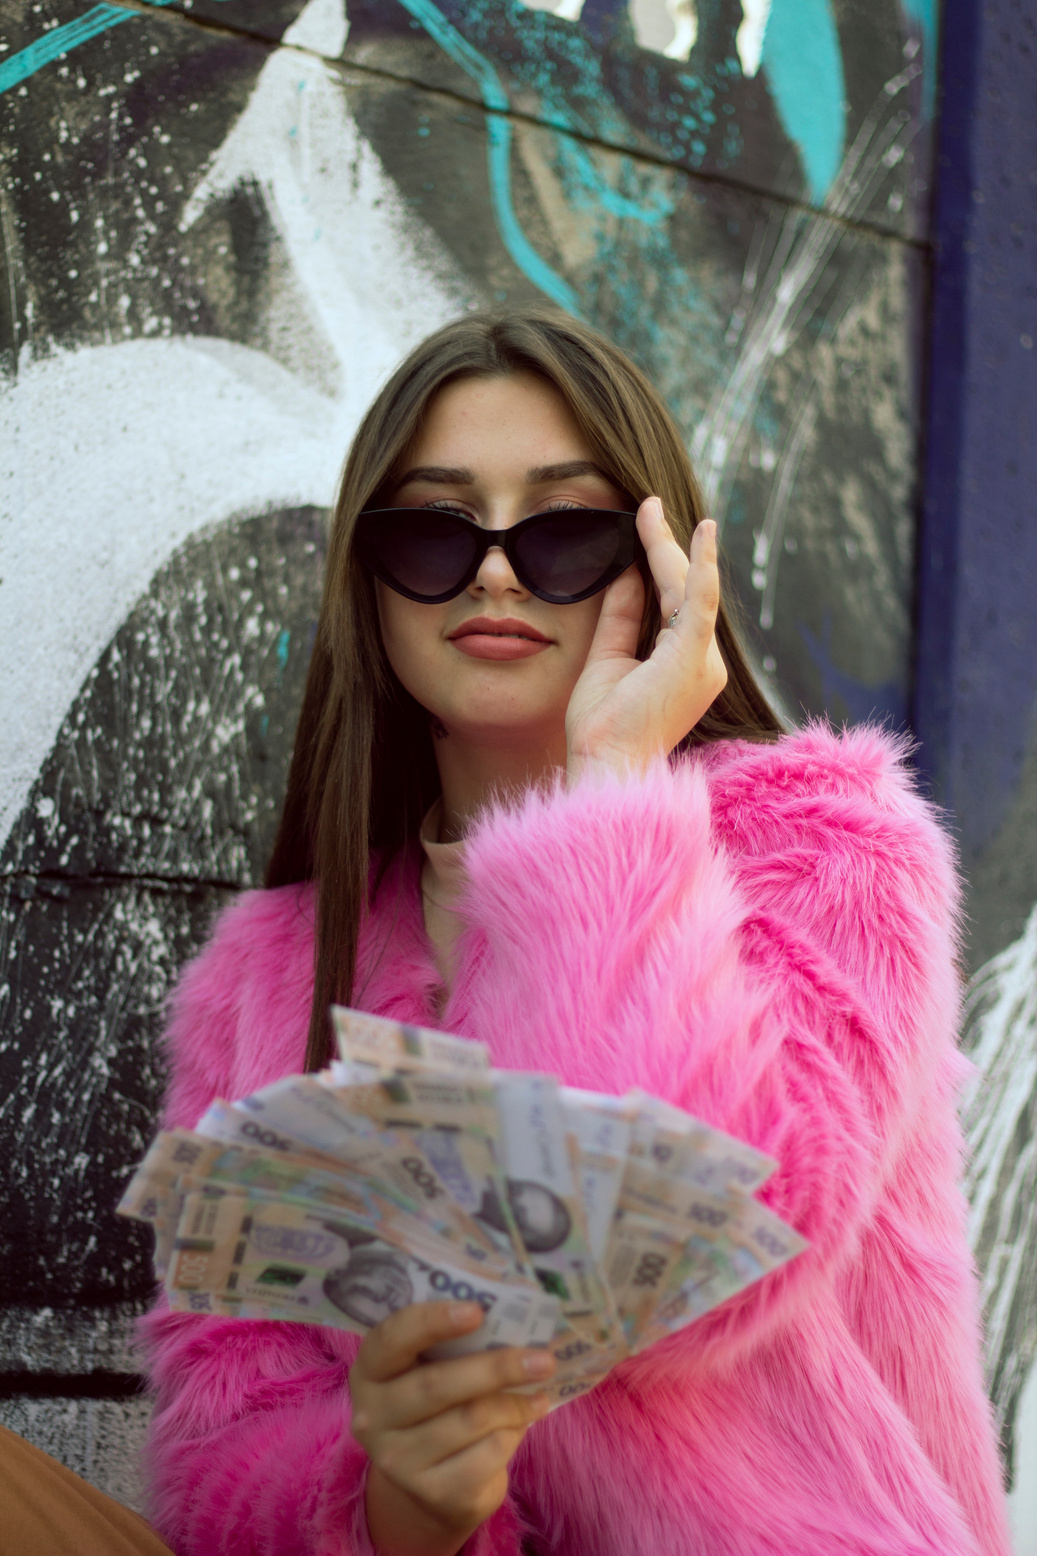 Woman in Pink Fur Coat Wearing Sunglasses